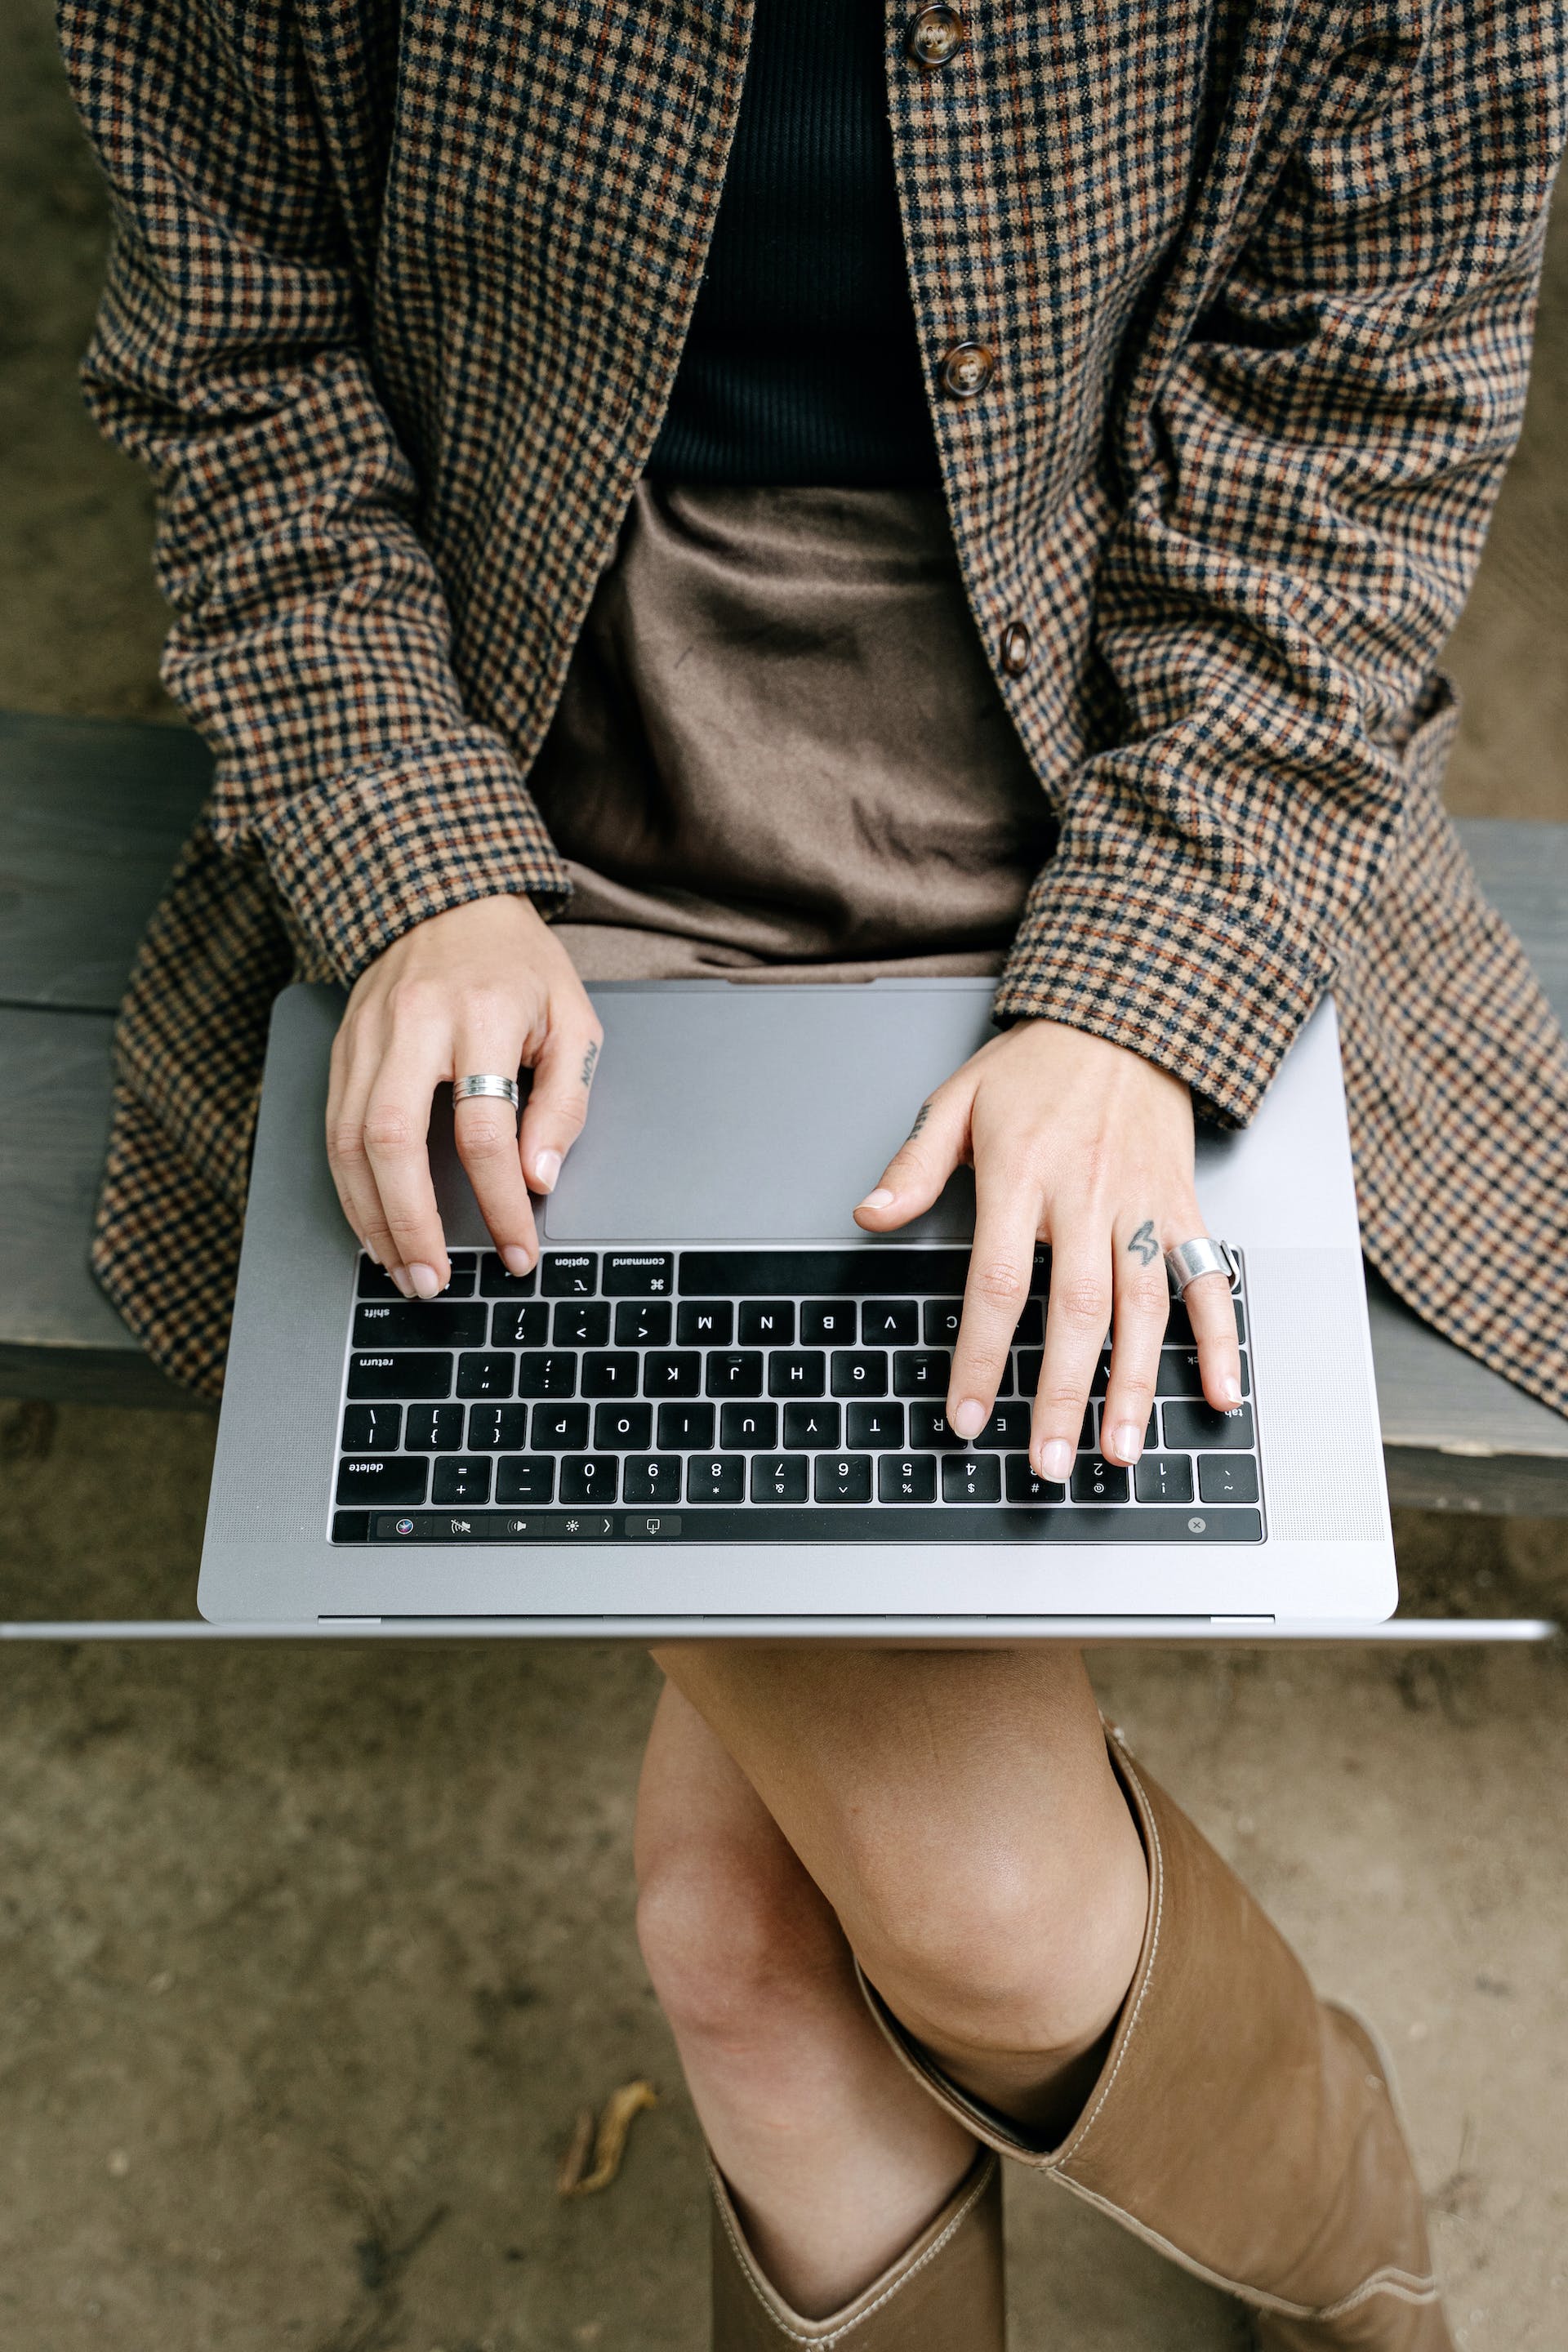 A woman using a laptop | Source: Pexels